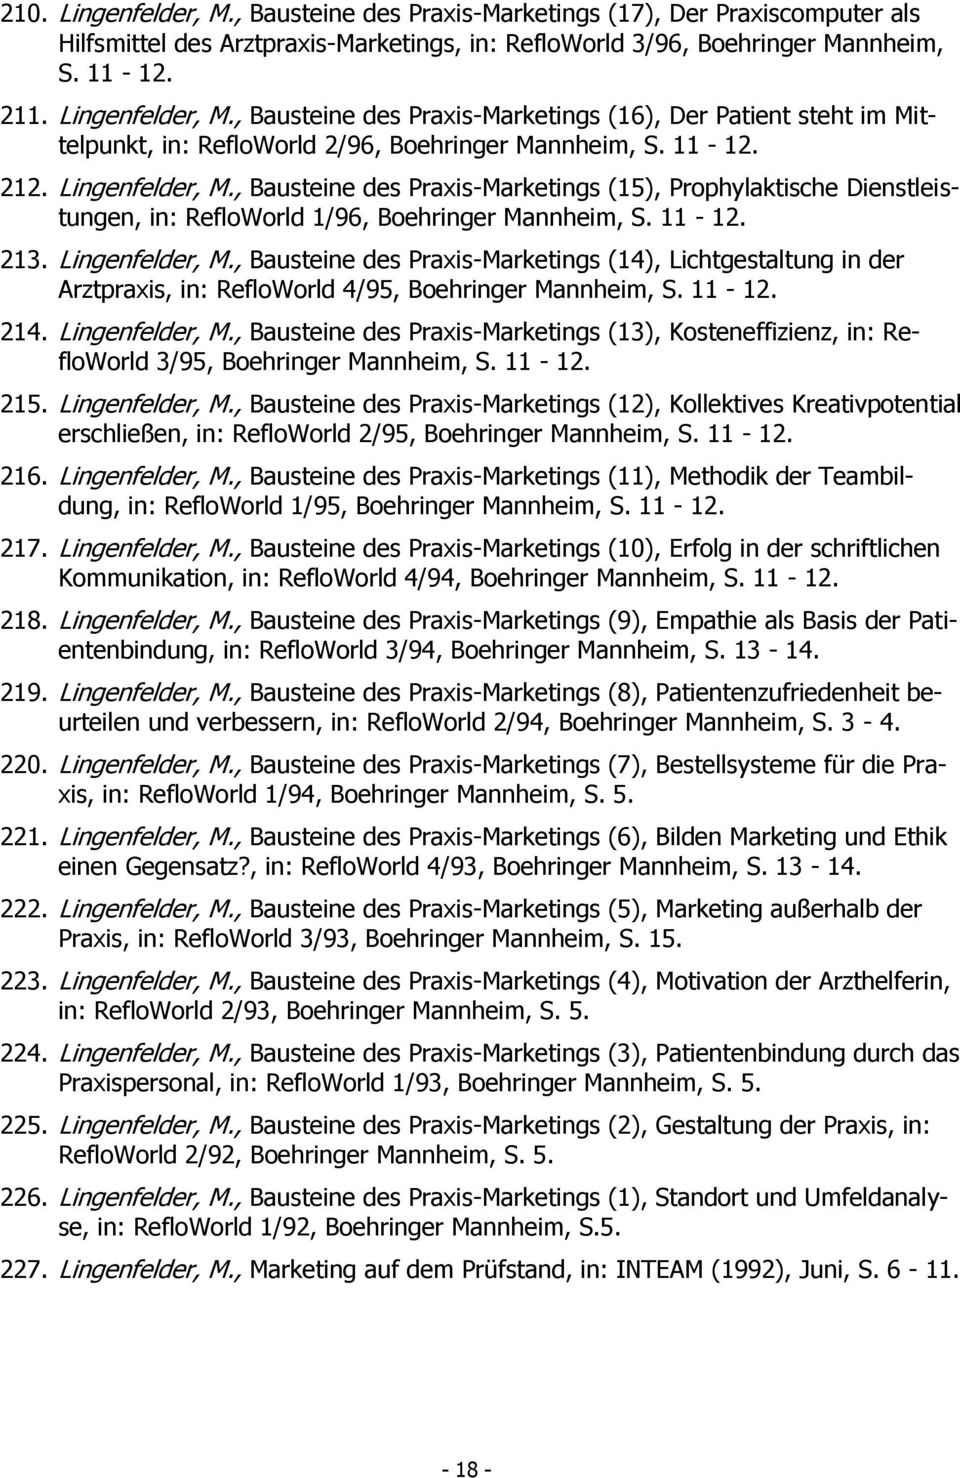 11-12. 214. Lingenfelder, M., Bausteine des Praxis-Marketings (13), Kosteneffizienz, in: RefloWorld 3/95, Boehringer Mannheim, S. 11-12. 215. Lingenfelder, M., Bausteine des Praxis-Marketings (12), Kollektives Kreativpotential erschließen, in: RefloWorld 2/95, Boehringer Mannheim, S.